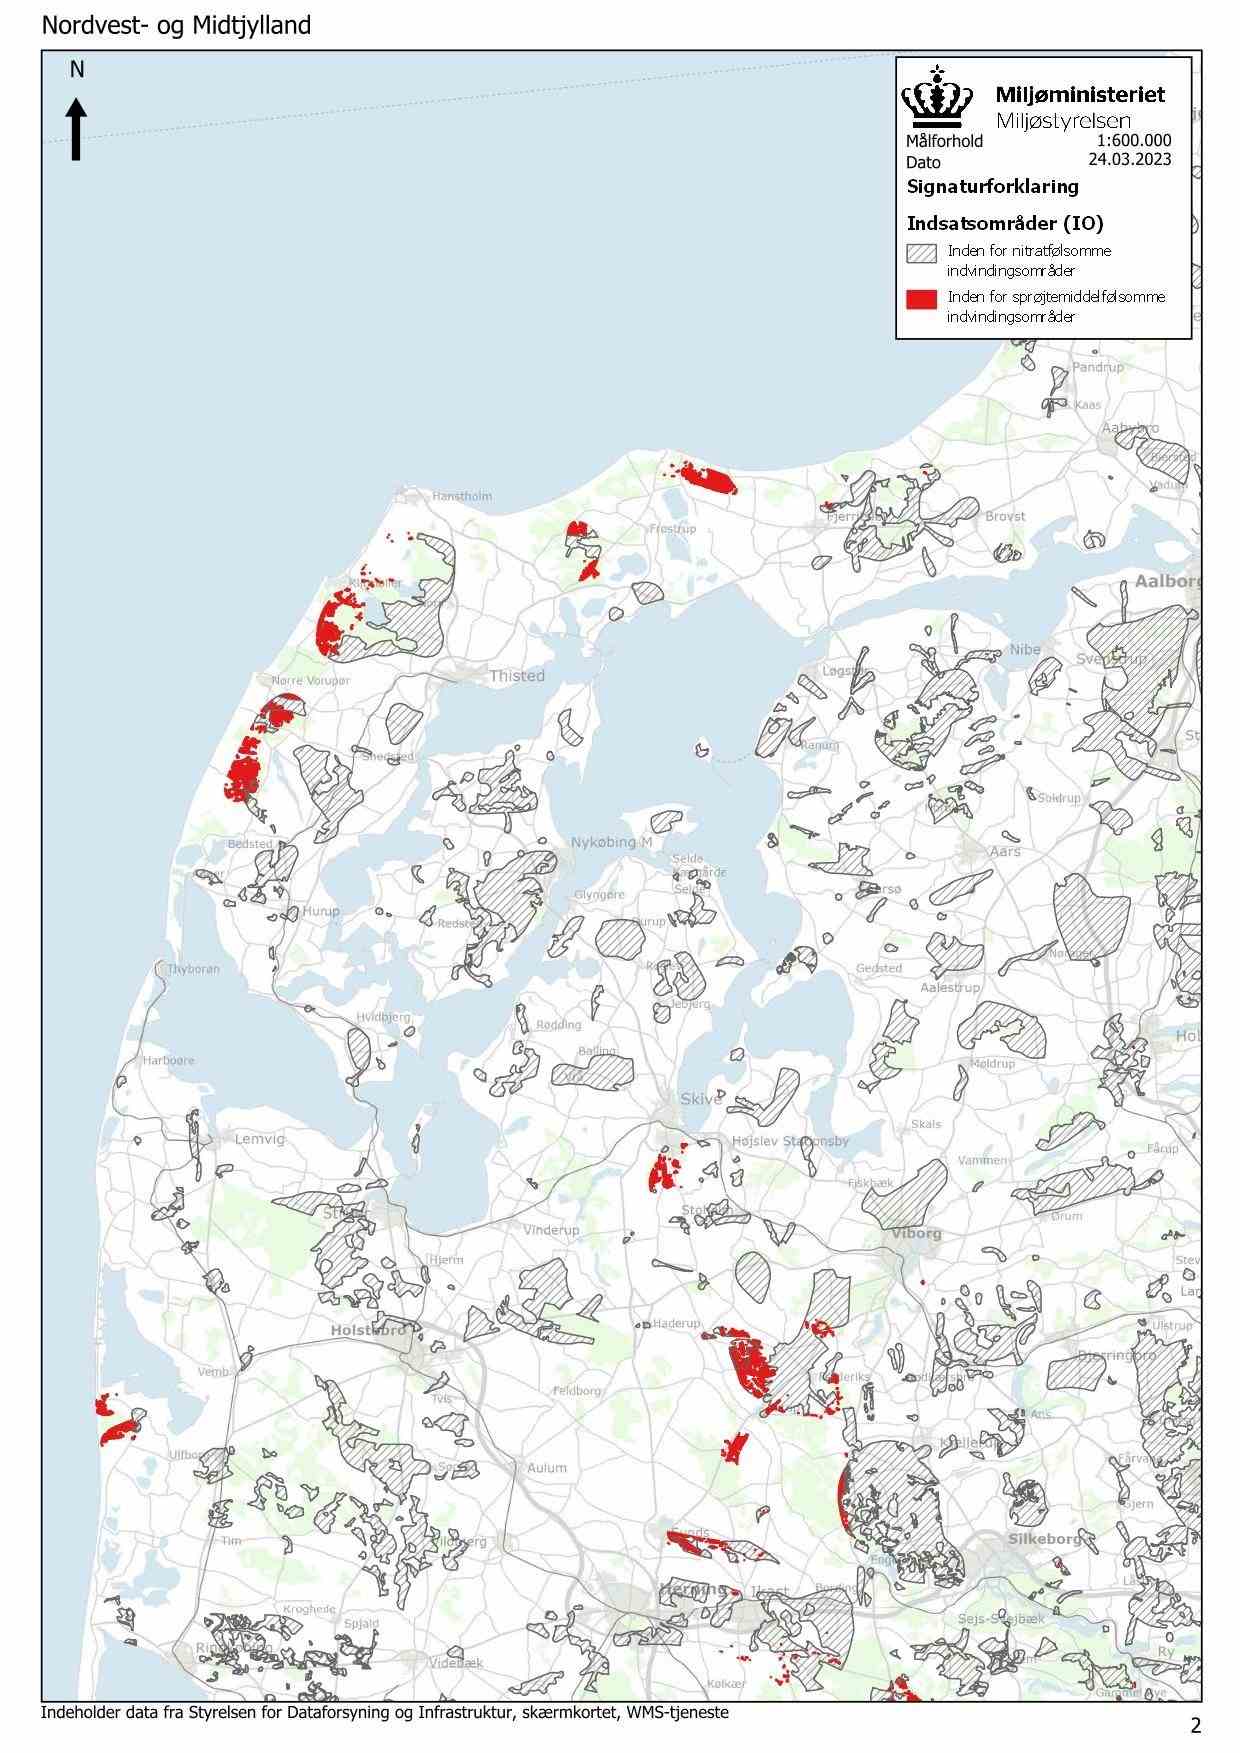 Indsatsområder Nordvest- og Midtjylland